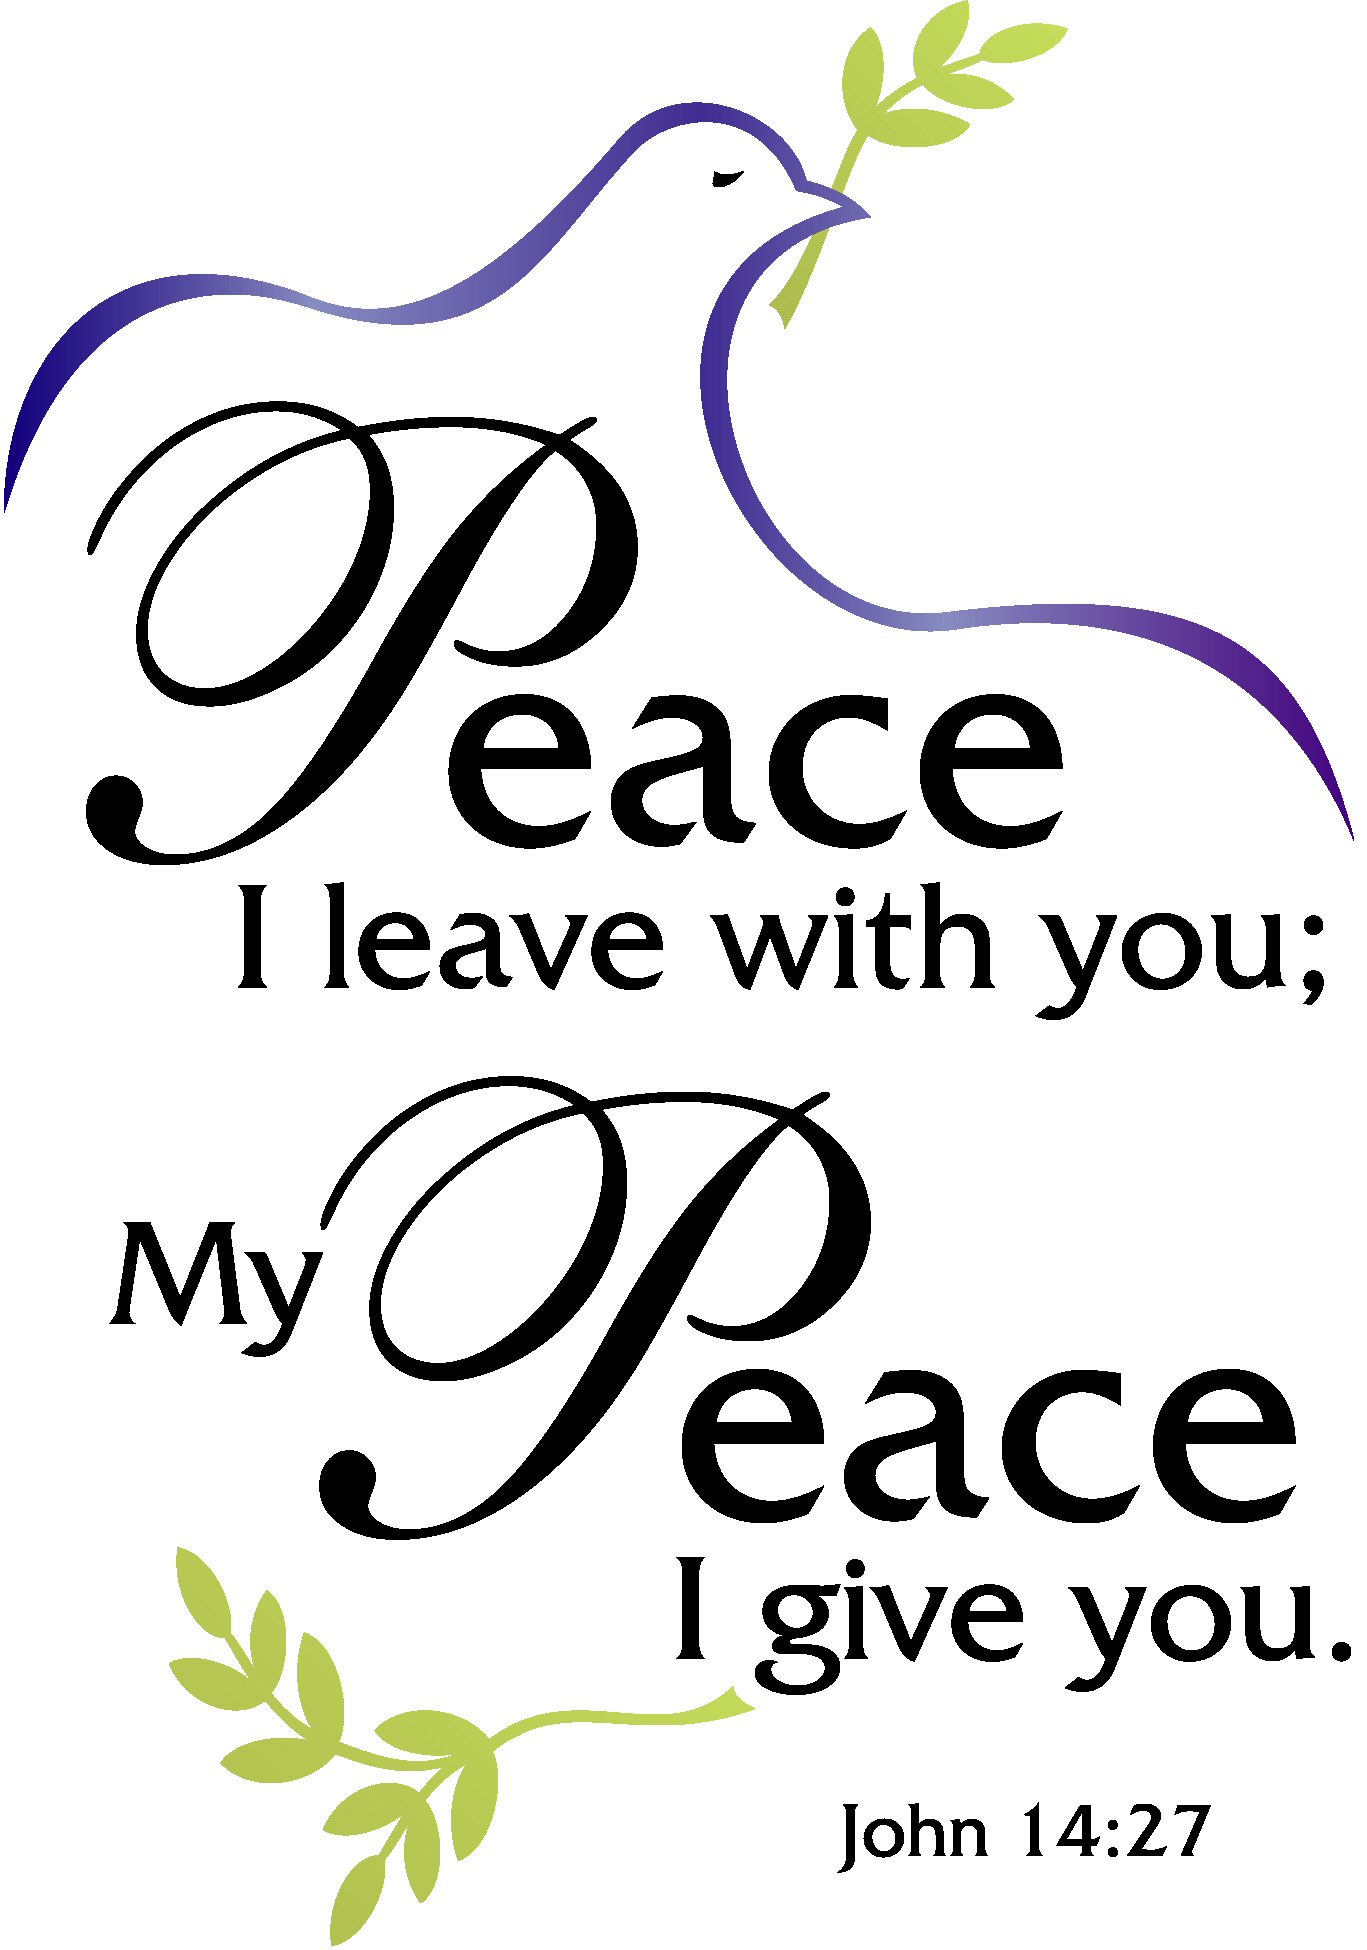 Peace in Jesus